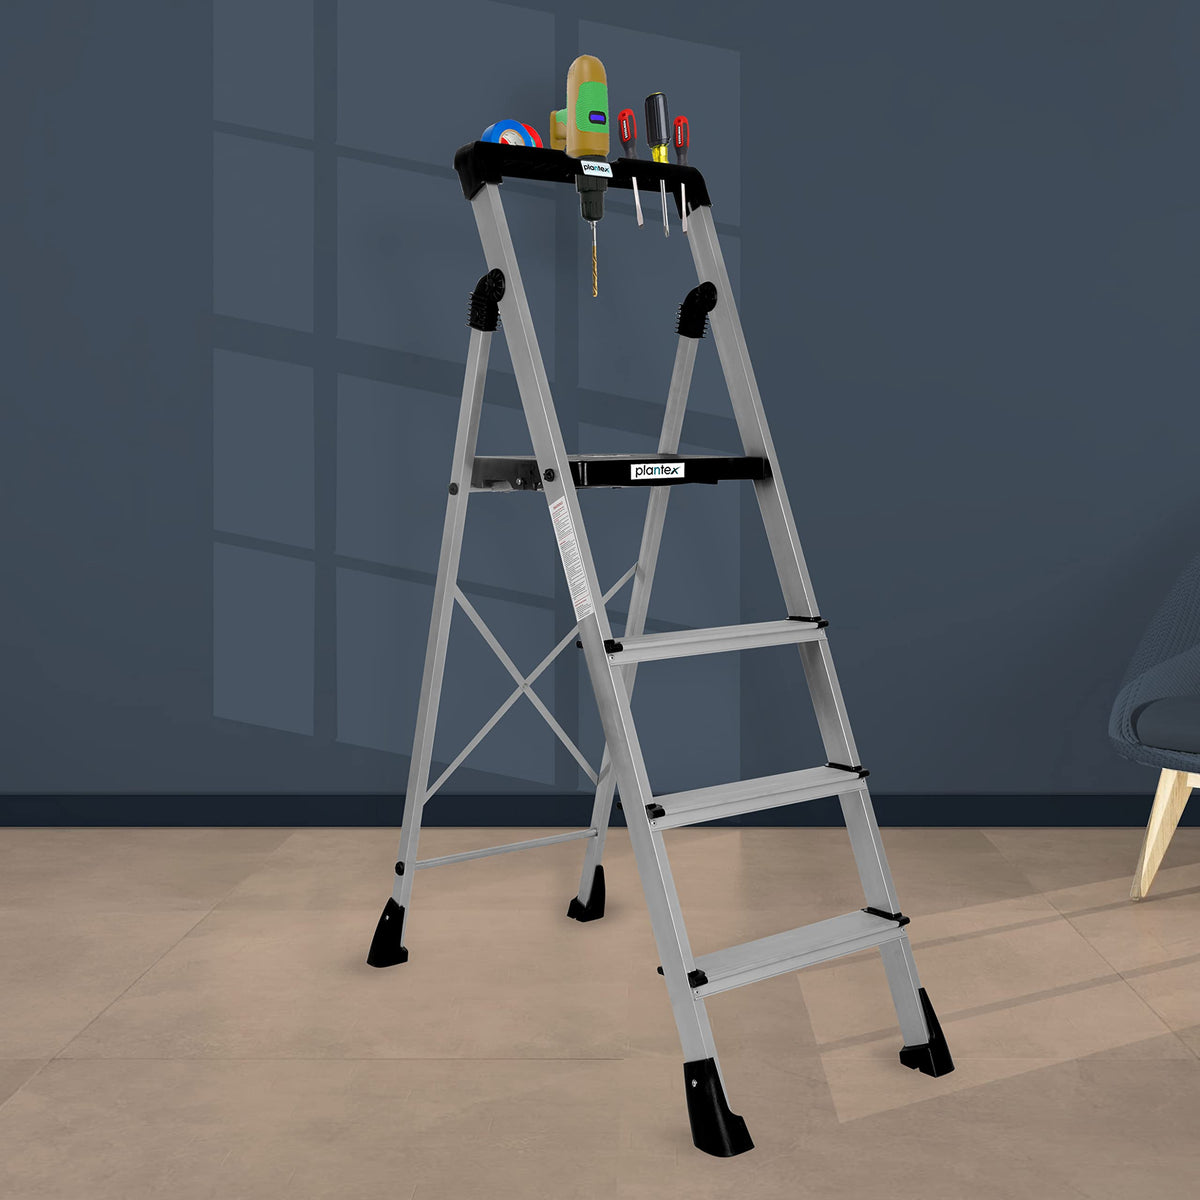 Plantex Thor Aluminium Step Folding Ladder 4 Step for Home with Advanced Locking System - 4 Step Ladder (Silver & Black)